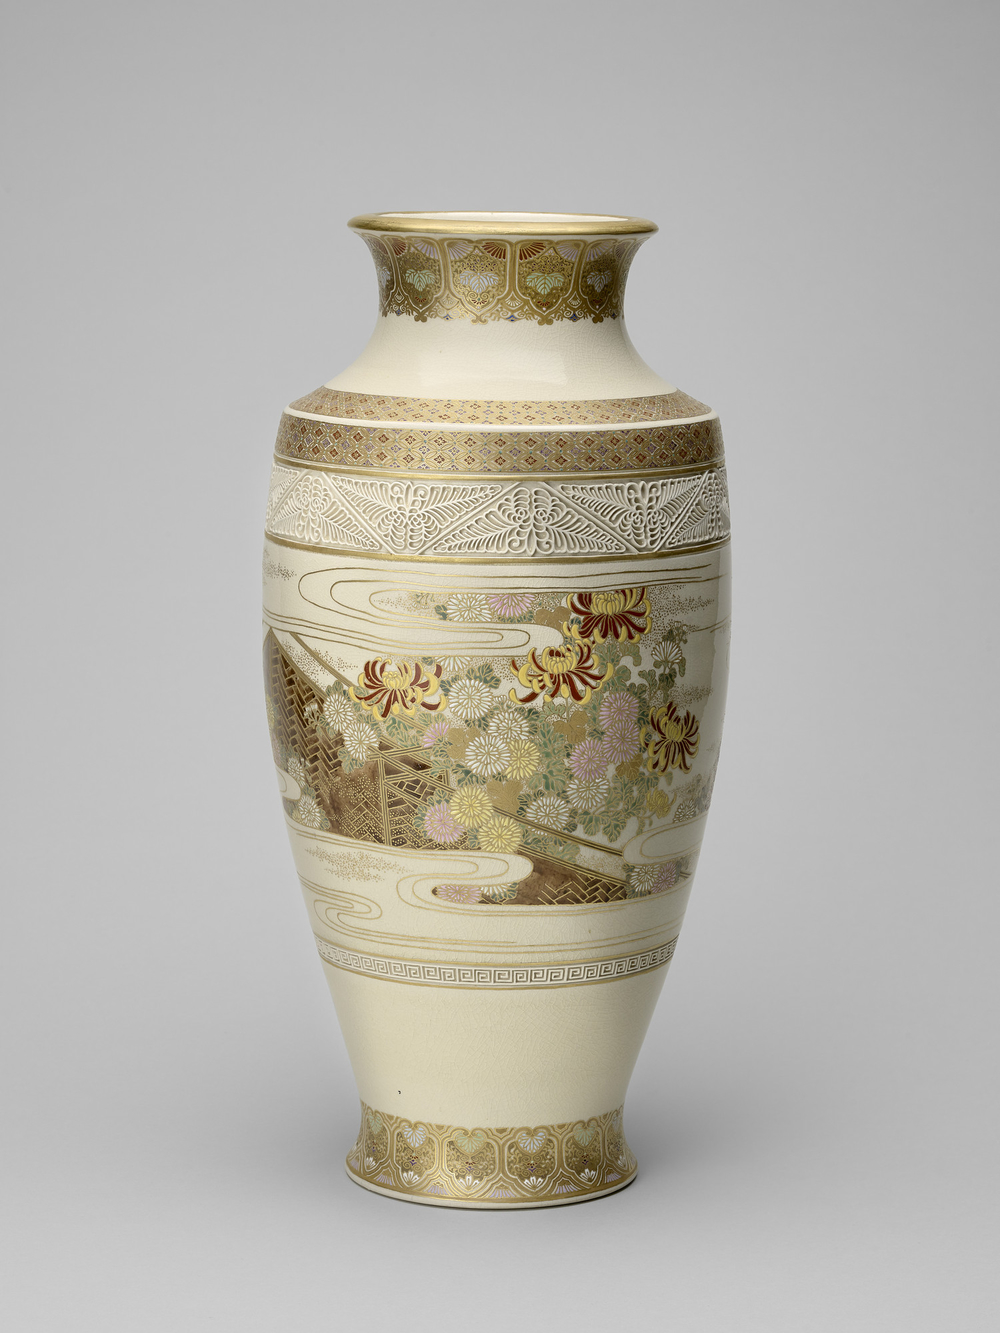 Early 20th century Japanese vase by potter Keida Masatarō